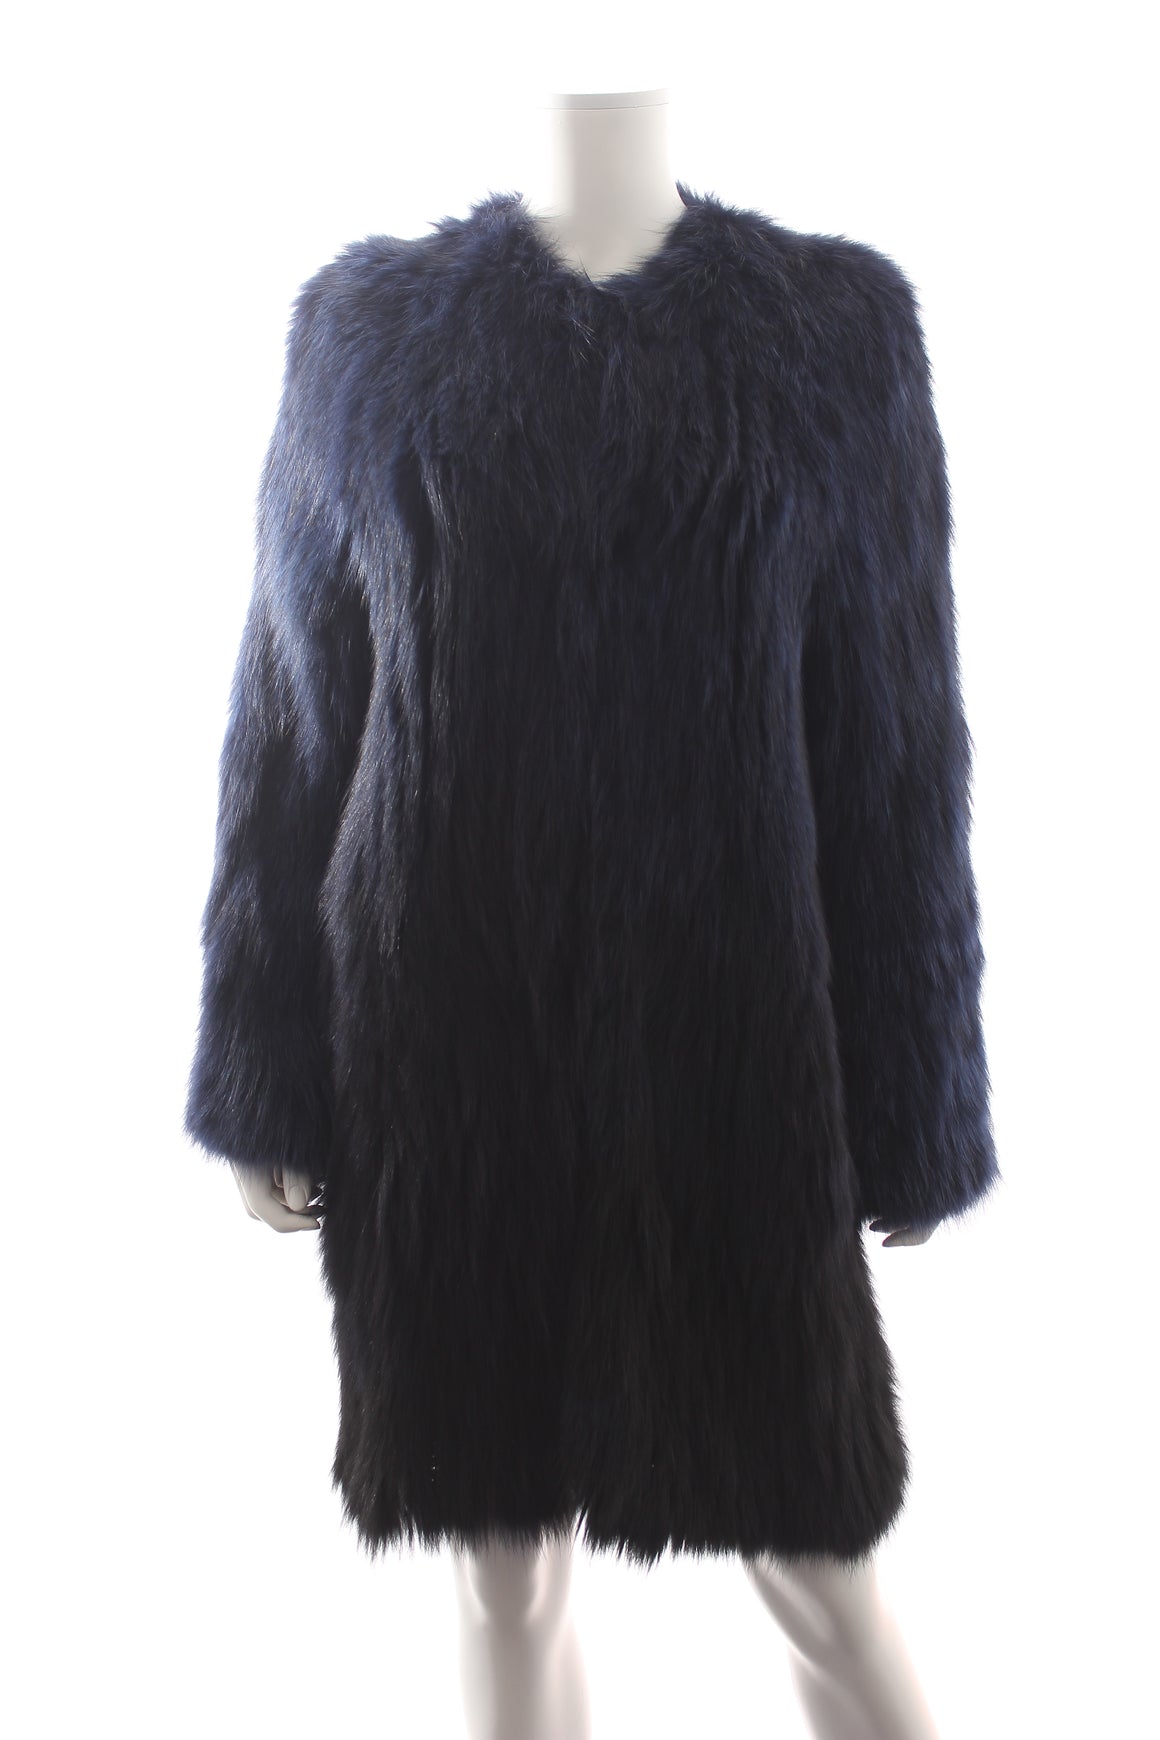 Yves Salomon Meteo Fox Fur Jacket